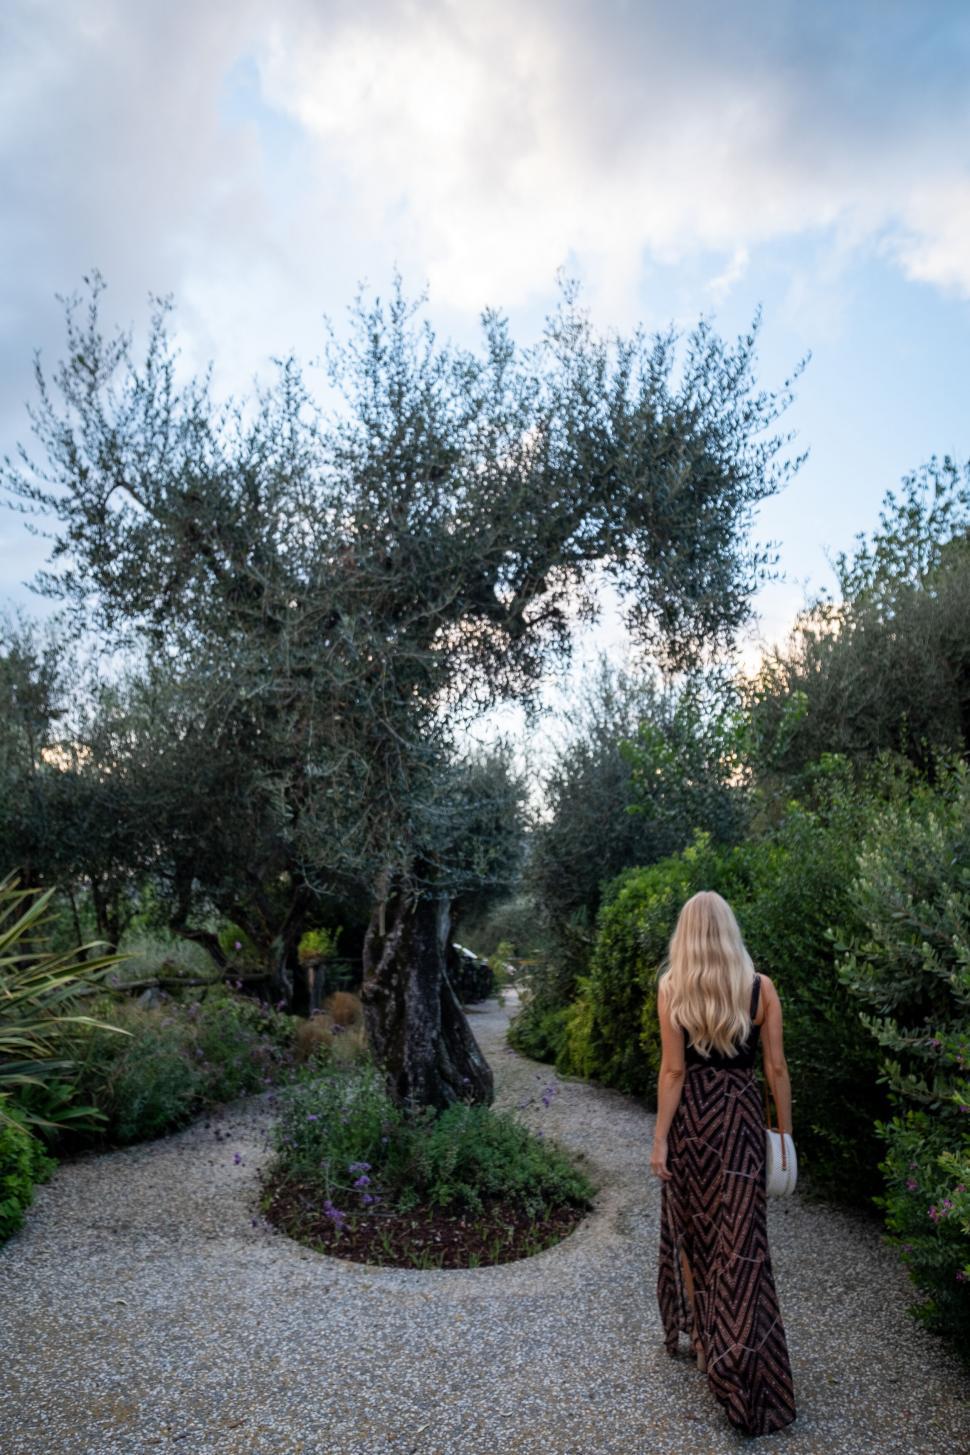 Free Image of Blonde woman walking in a lush garden 